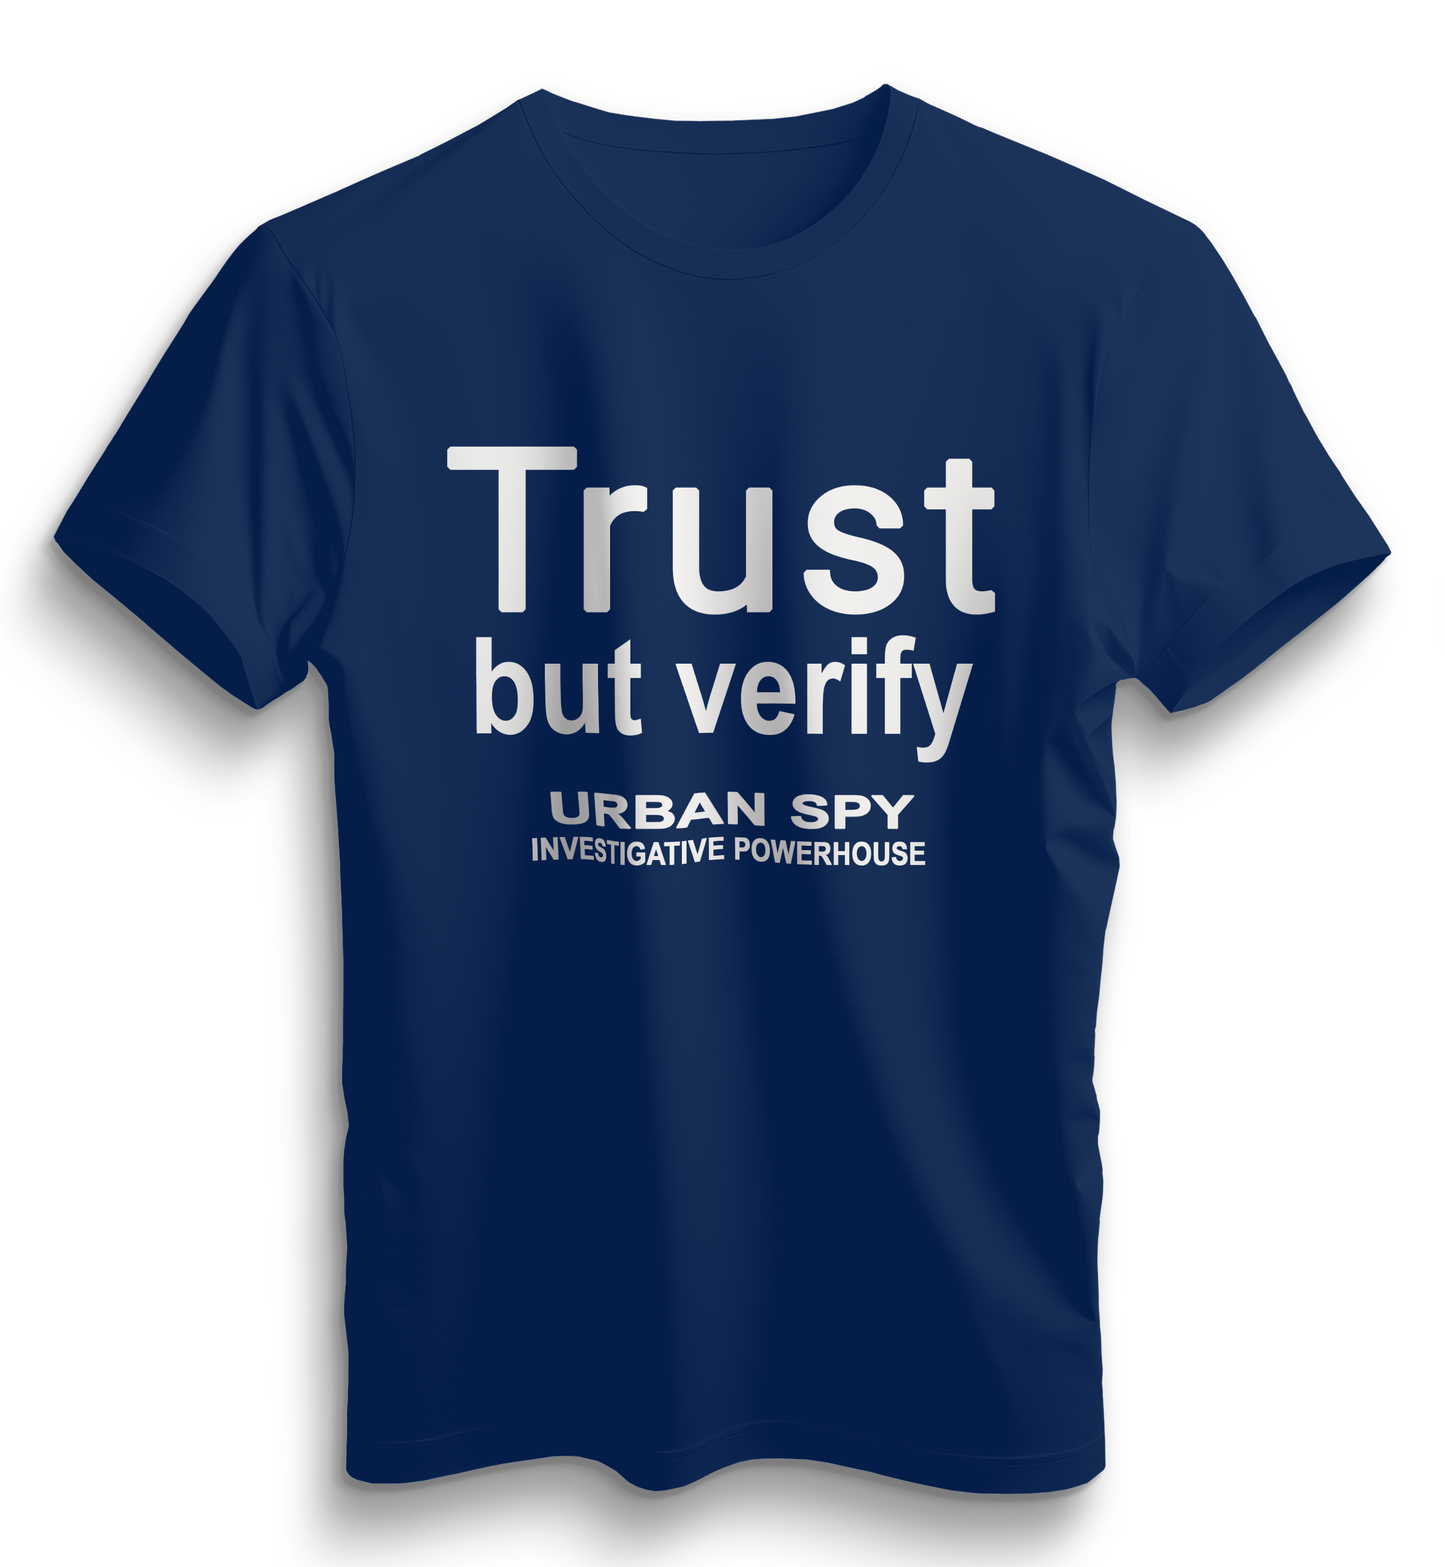 Urban Spy Shop "Trust But Verify" short sleeve T-Shirt